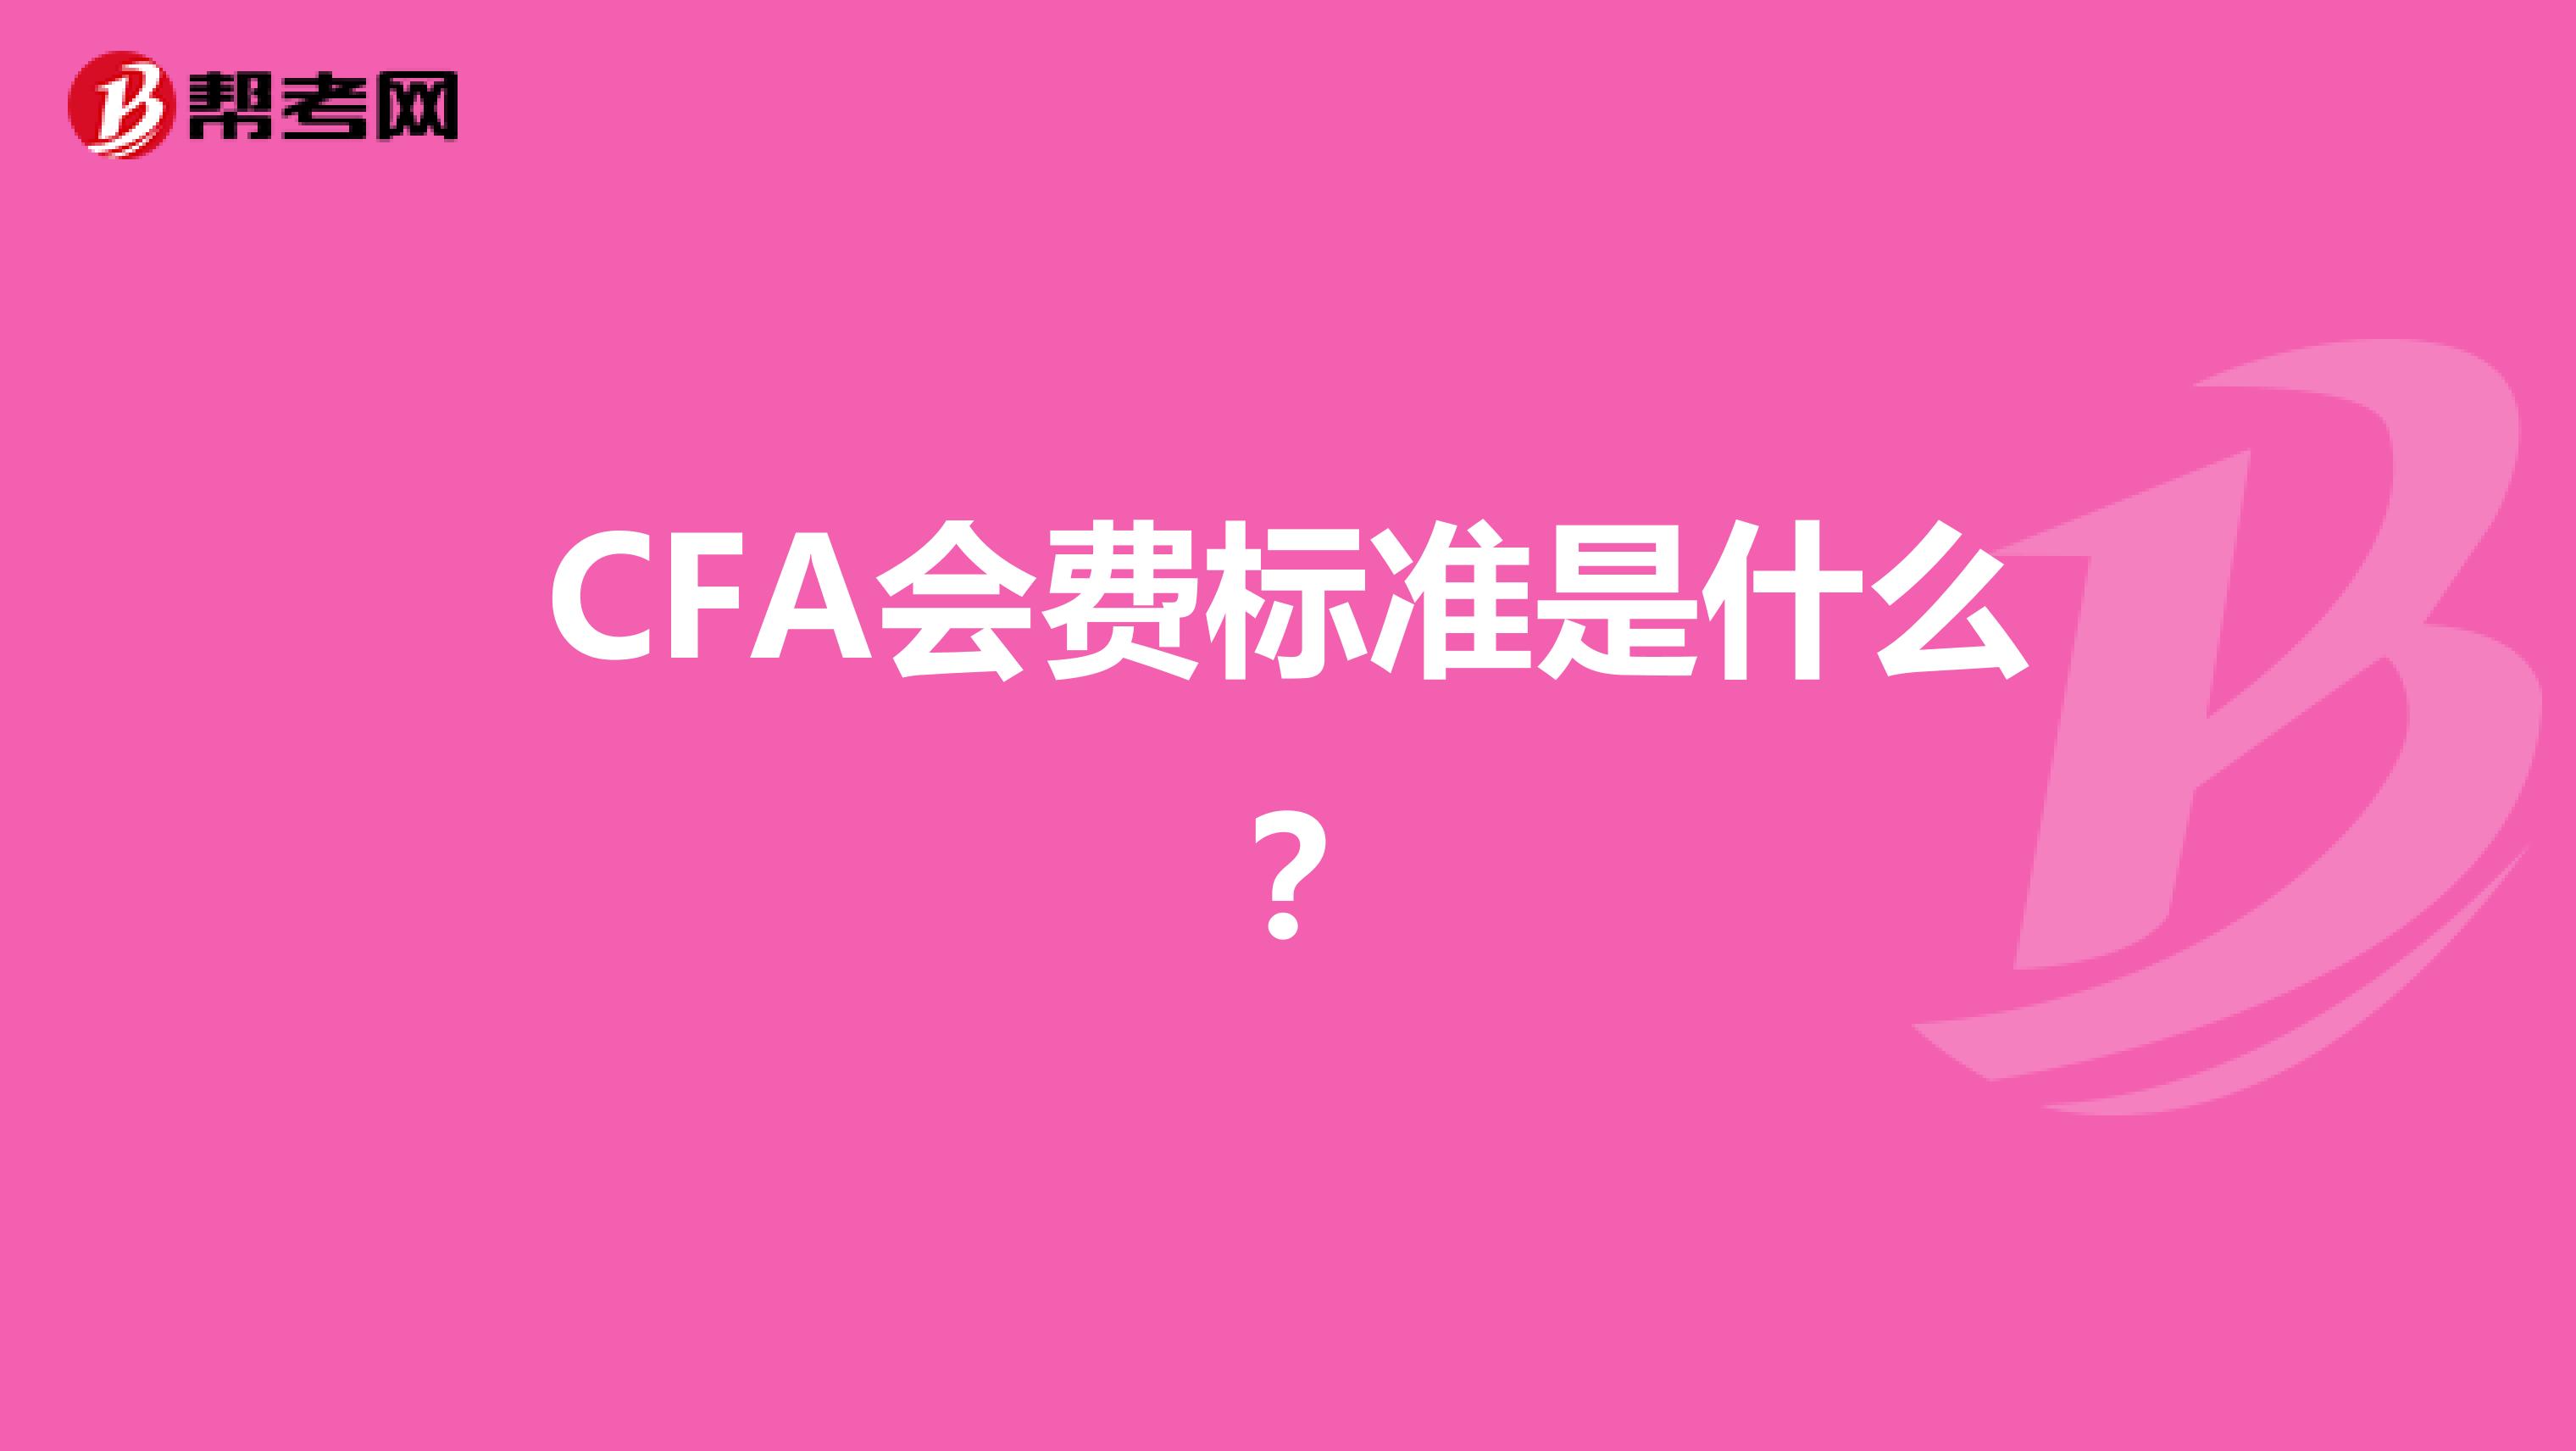 CFA会费标准是什么？